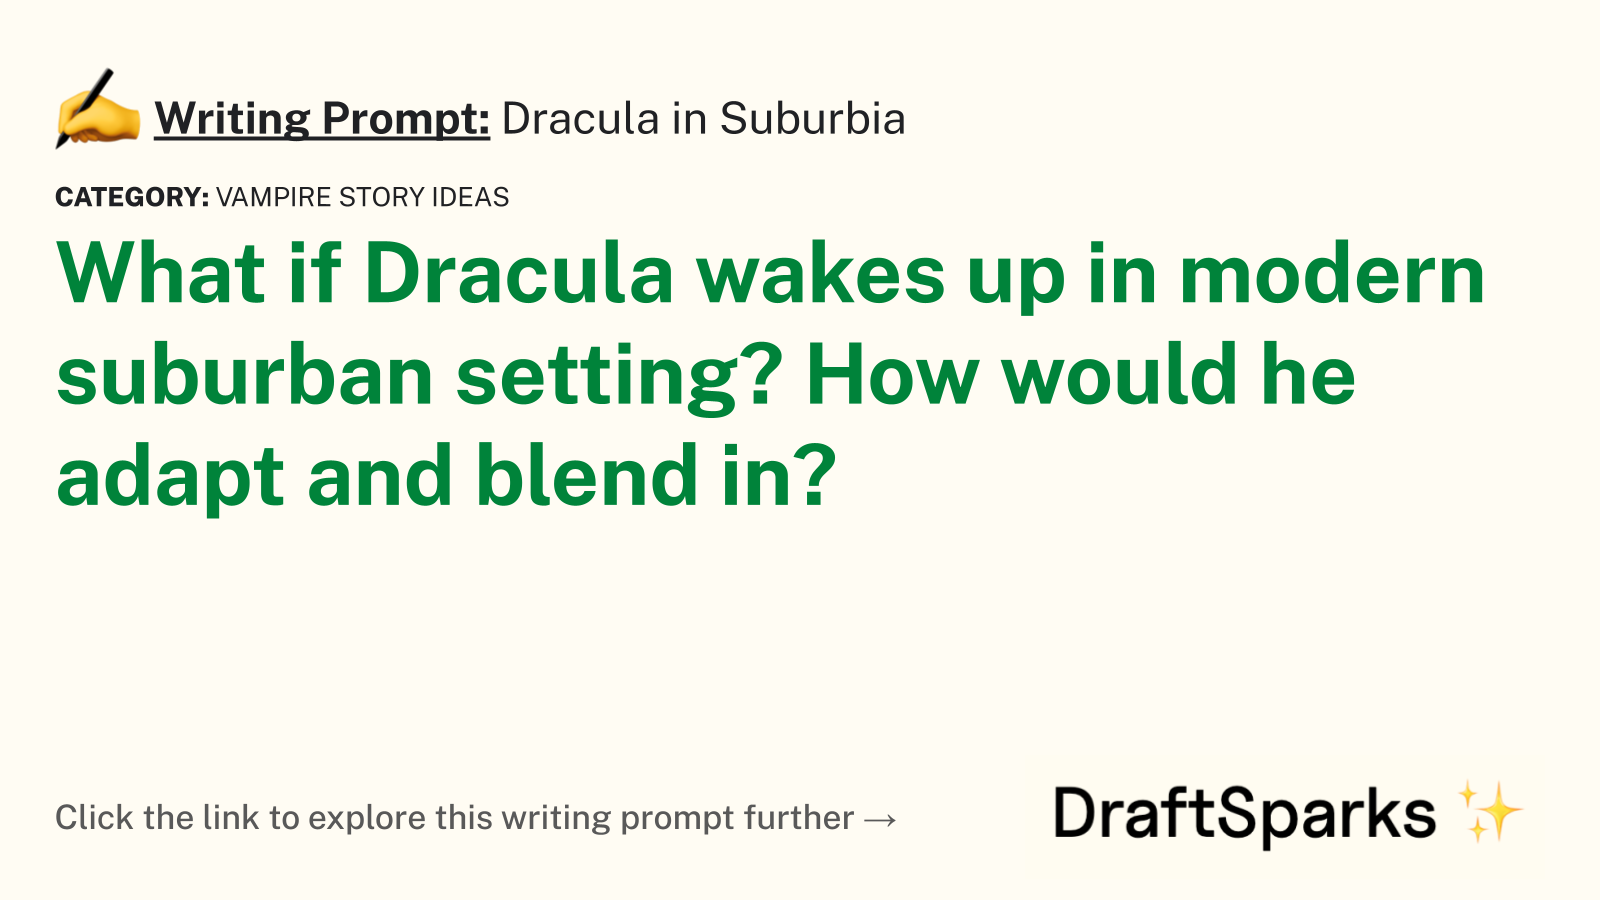 Dracula in Suburbia